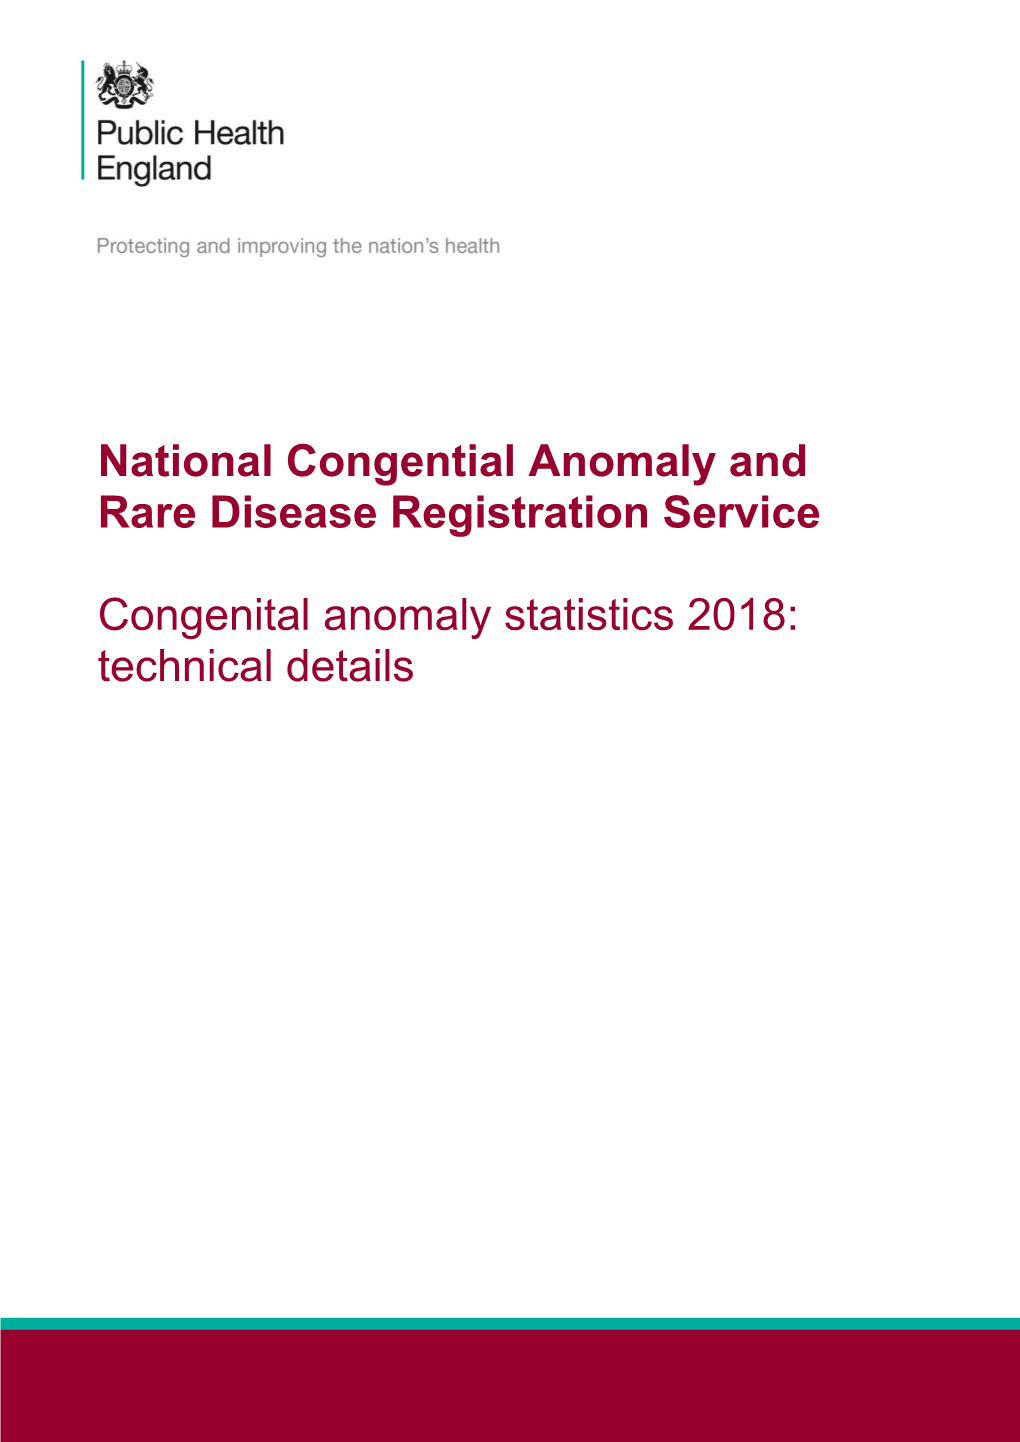 Congenital Anomaly Statistics 2018: Technical Details Congential Anomaly Statistics 2018: Technical Details